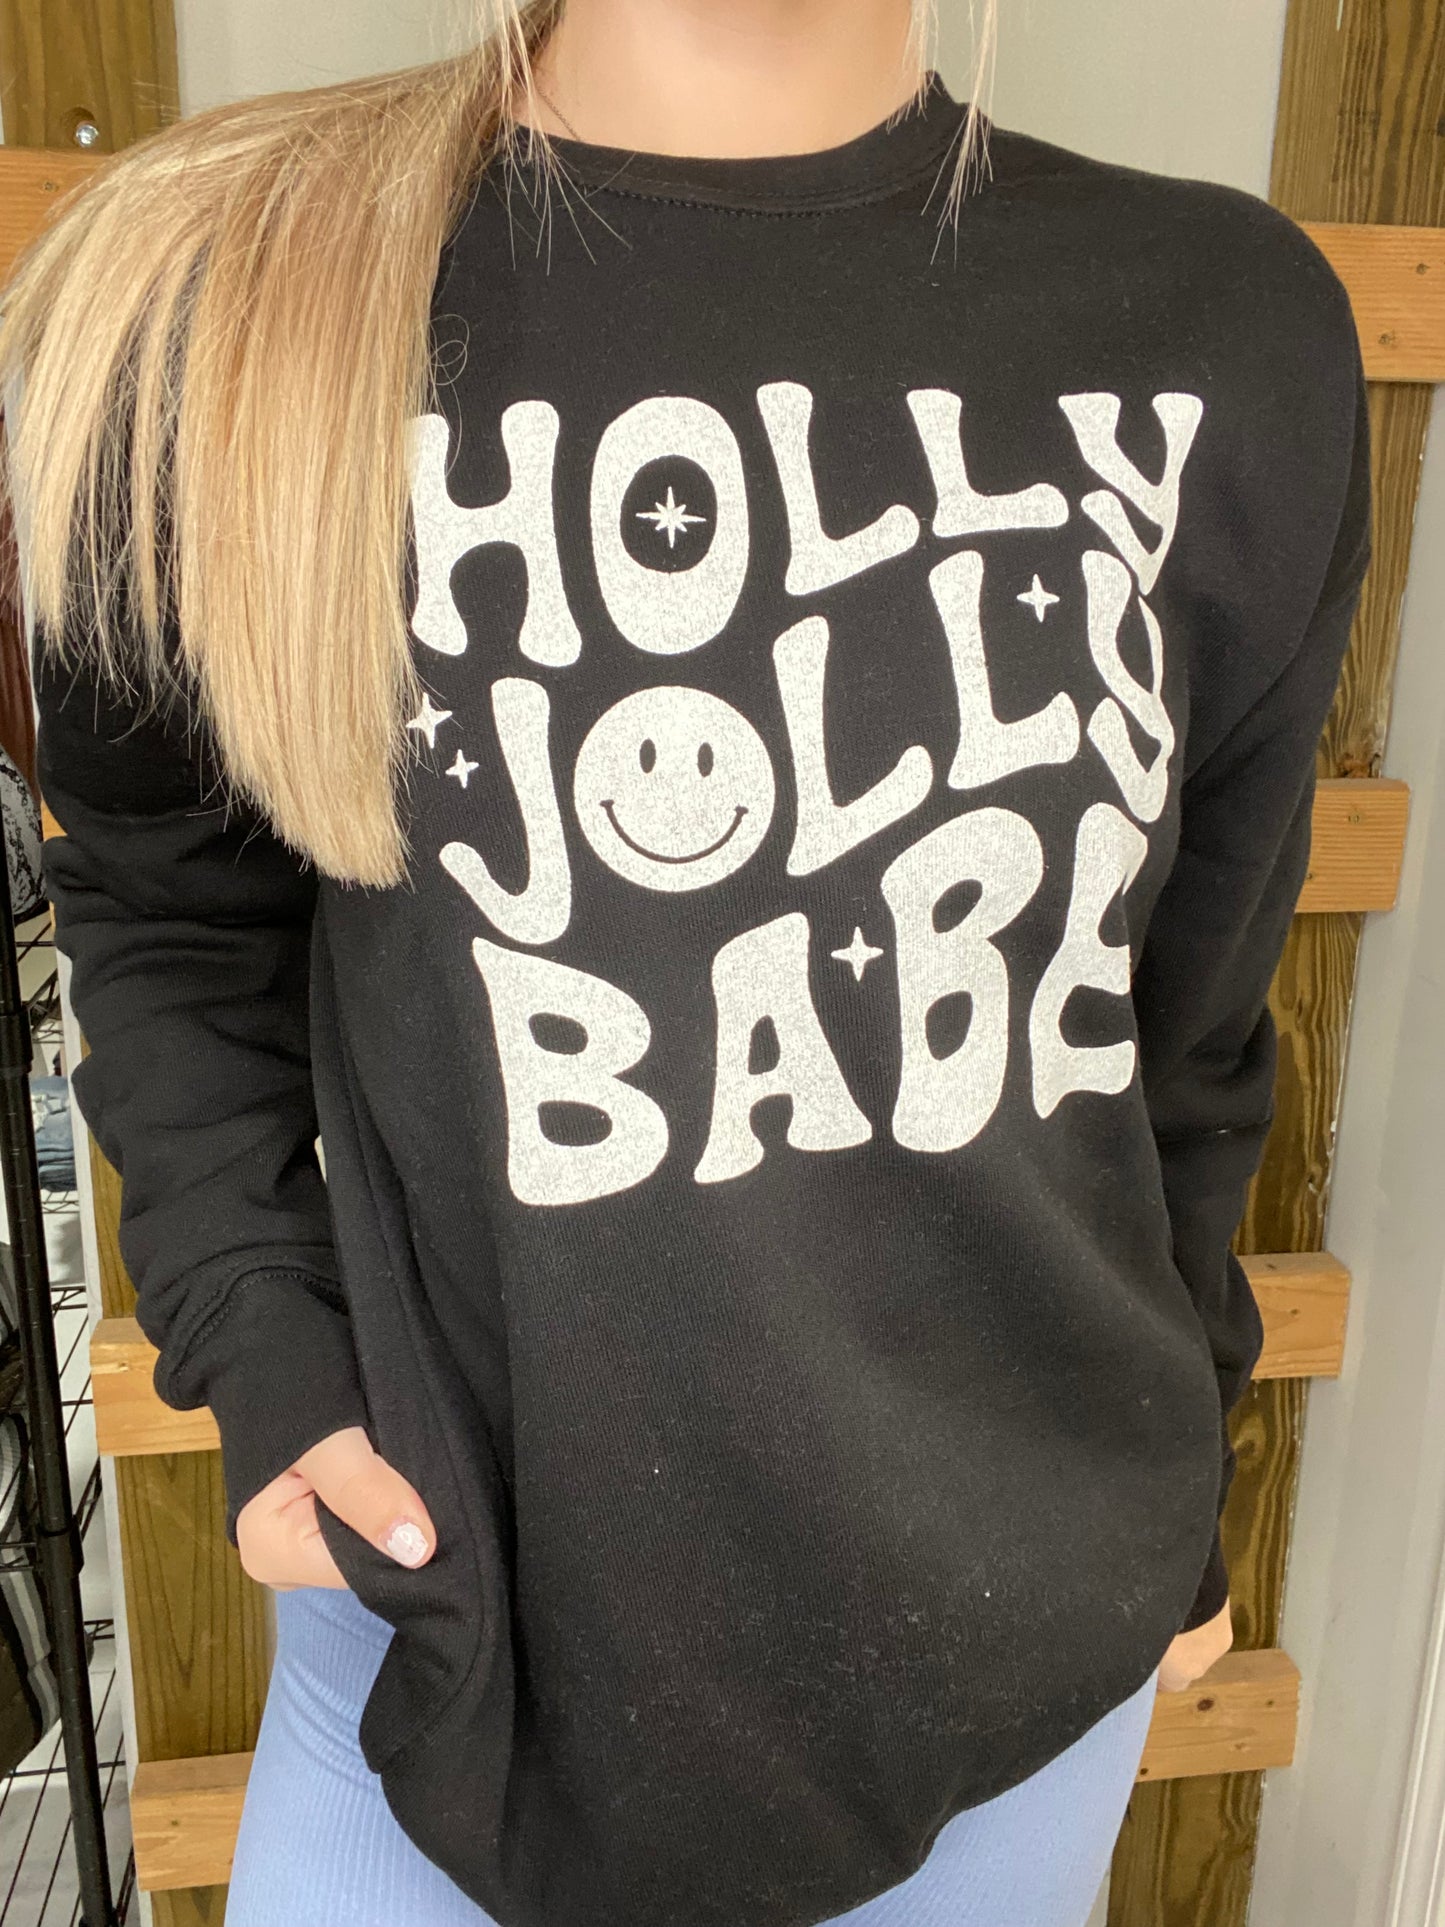 Holly Jolly Babe Sweatshirt in Black